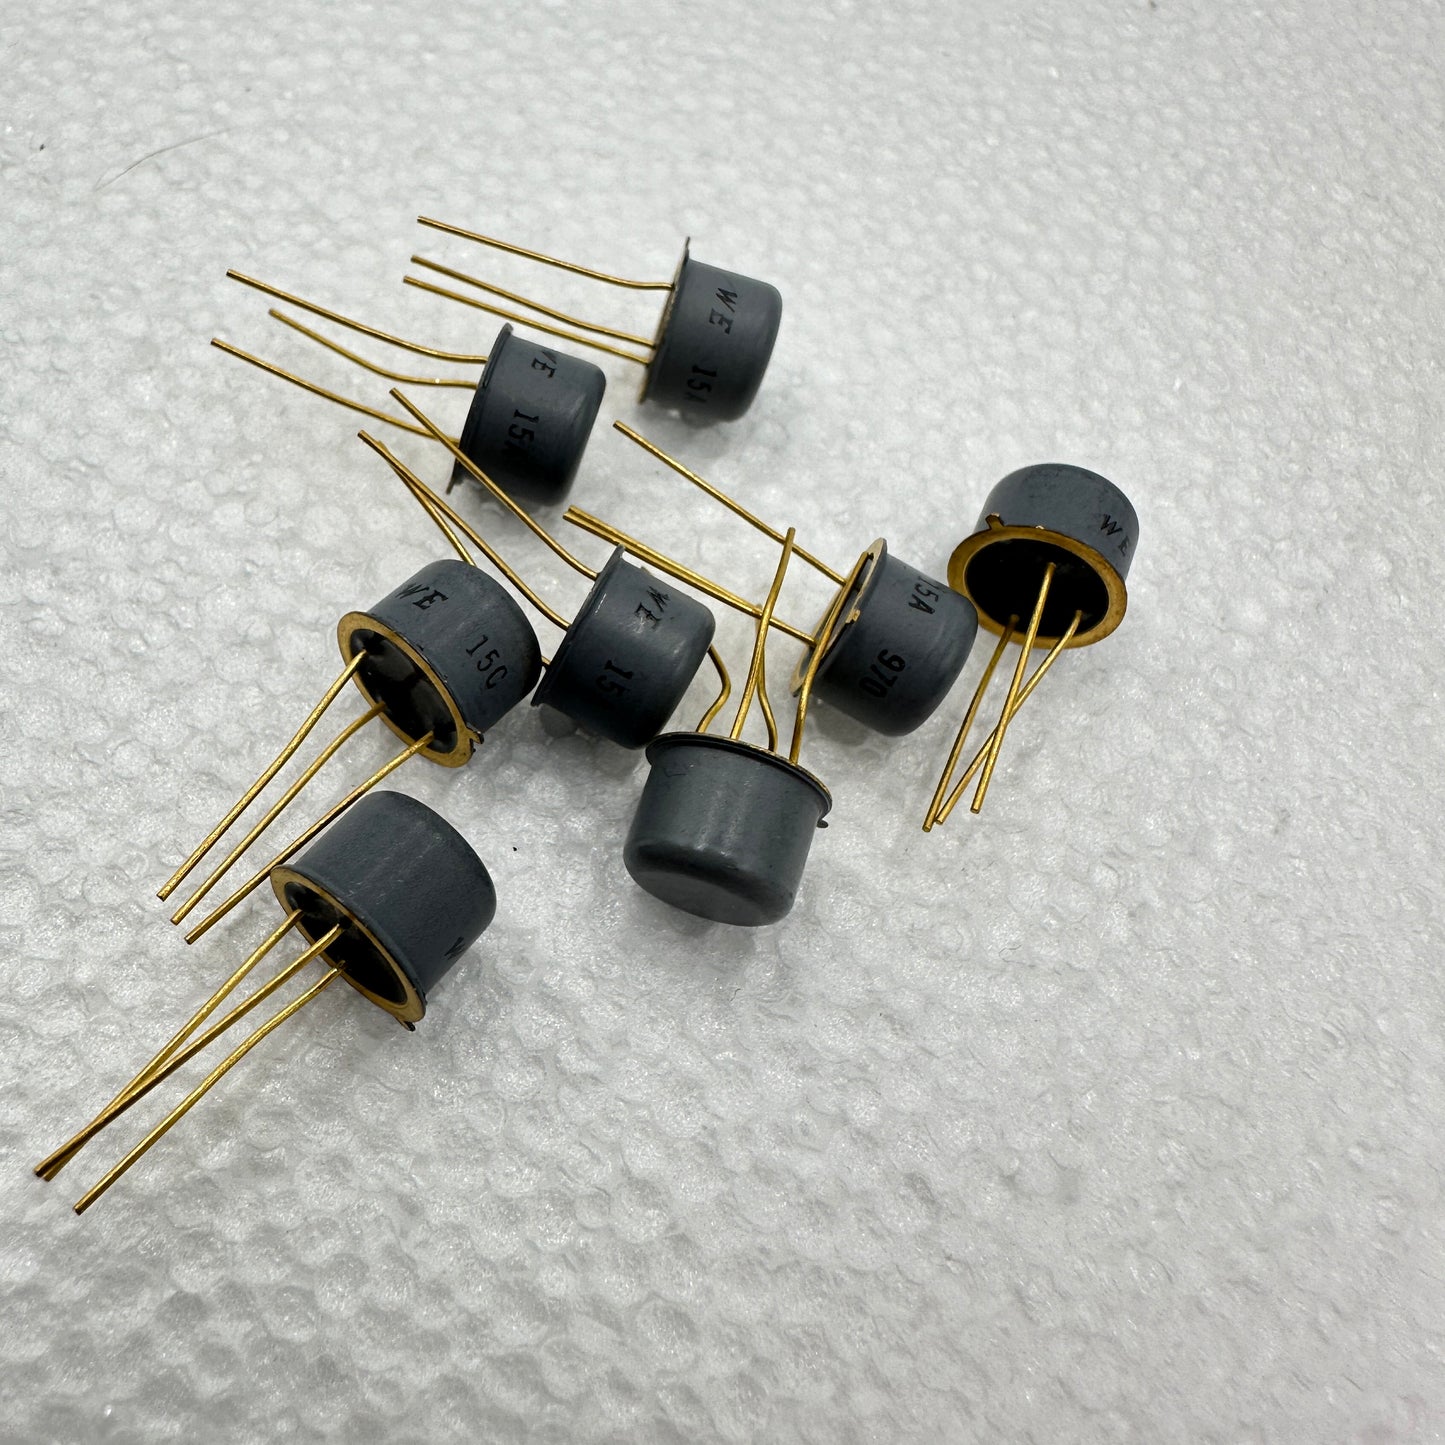 WE 15A/C Germanium Transistor NOS - Rare & Reclaimed